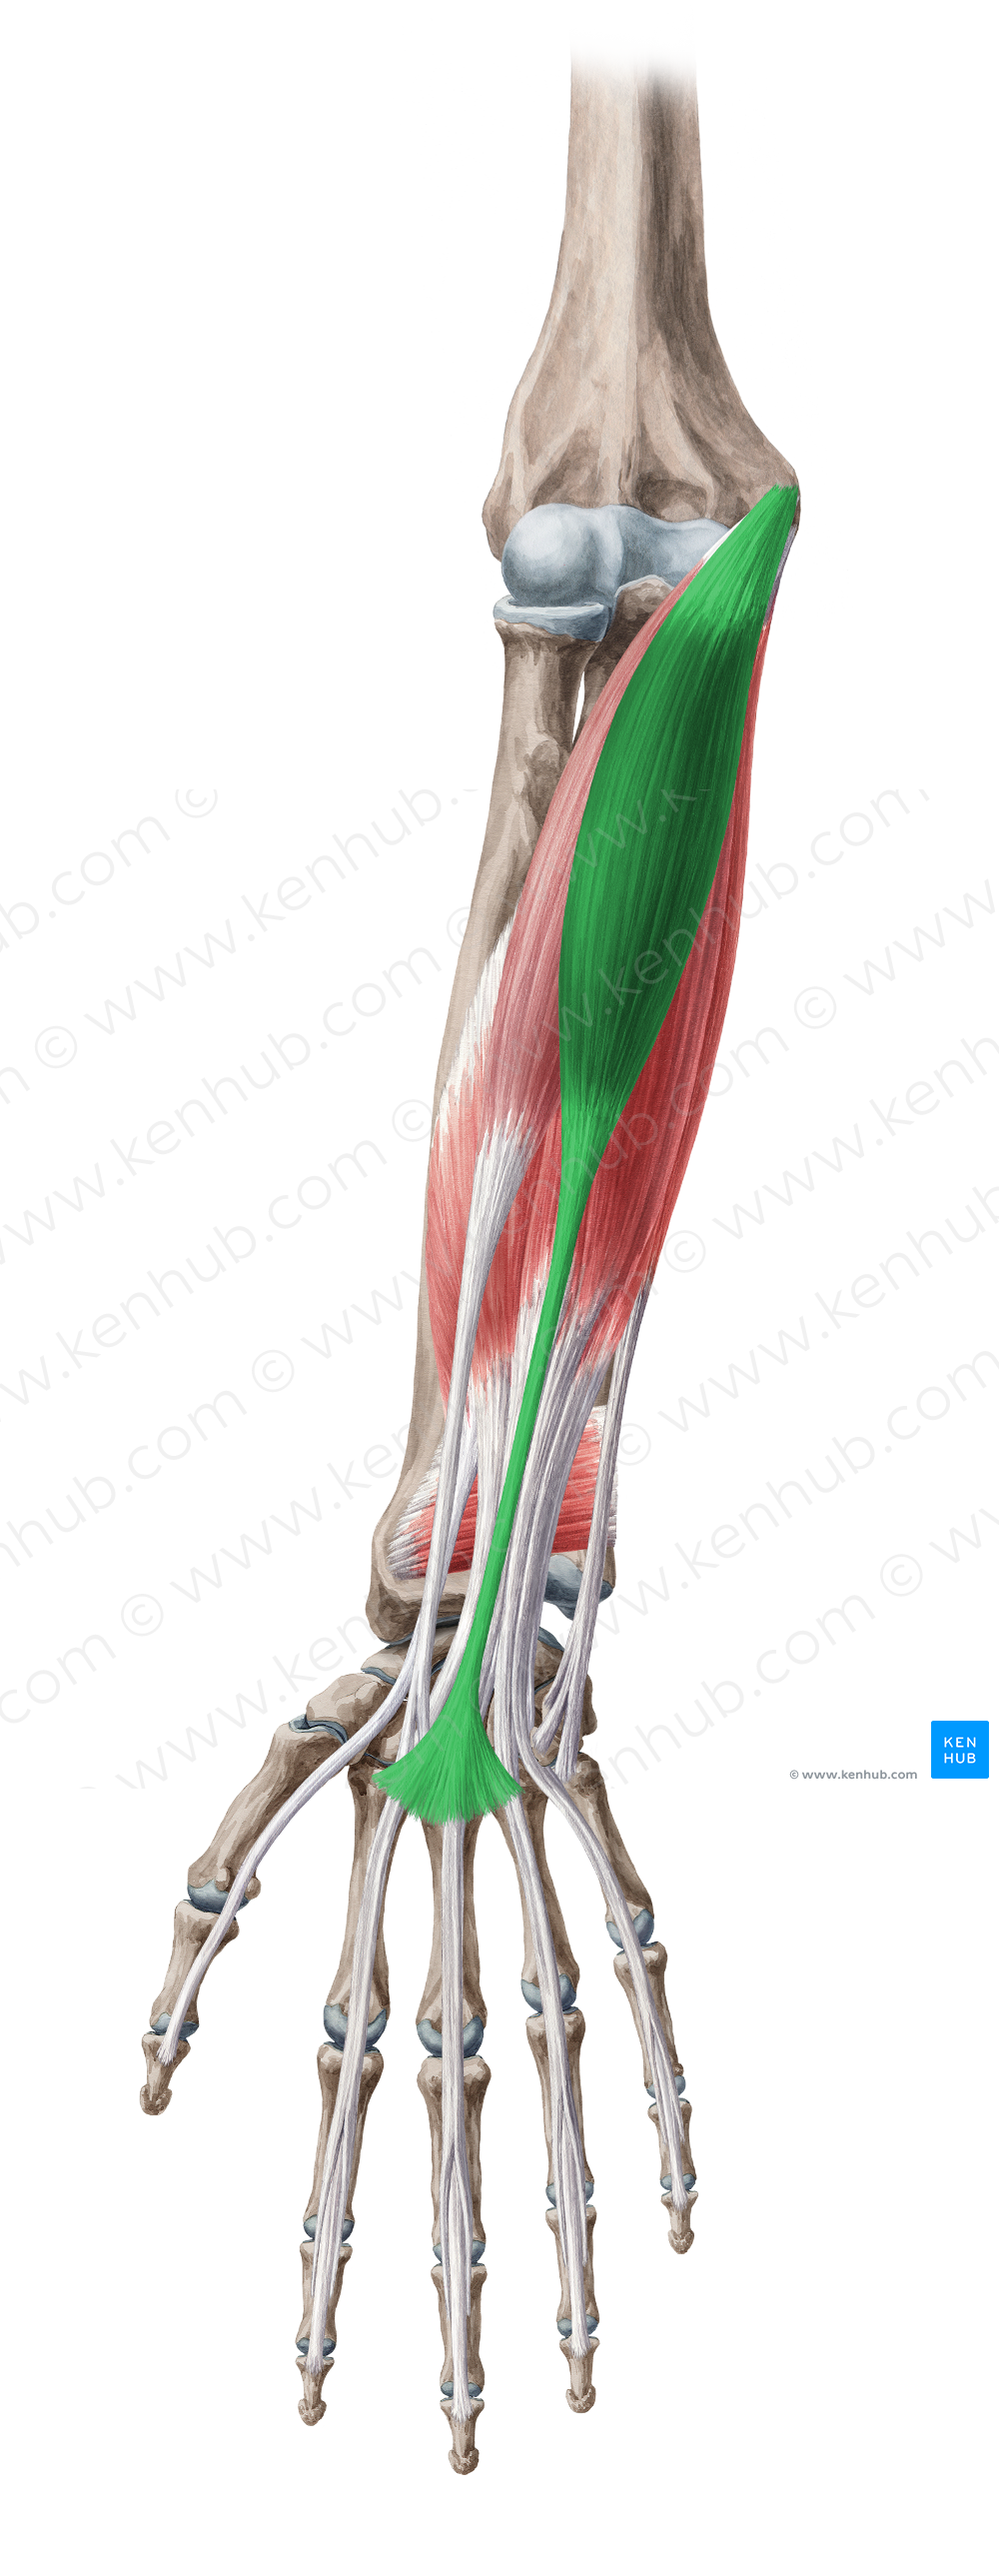 Palmaris longus muscle (#5707)